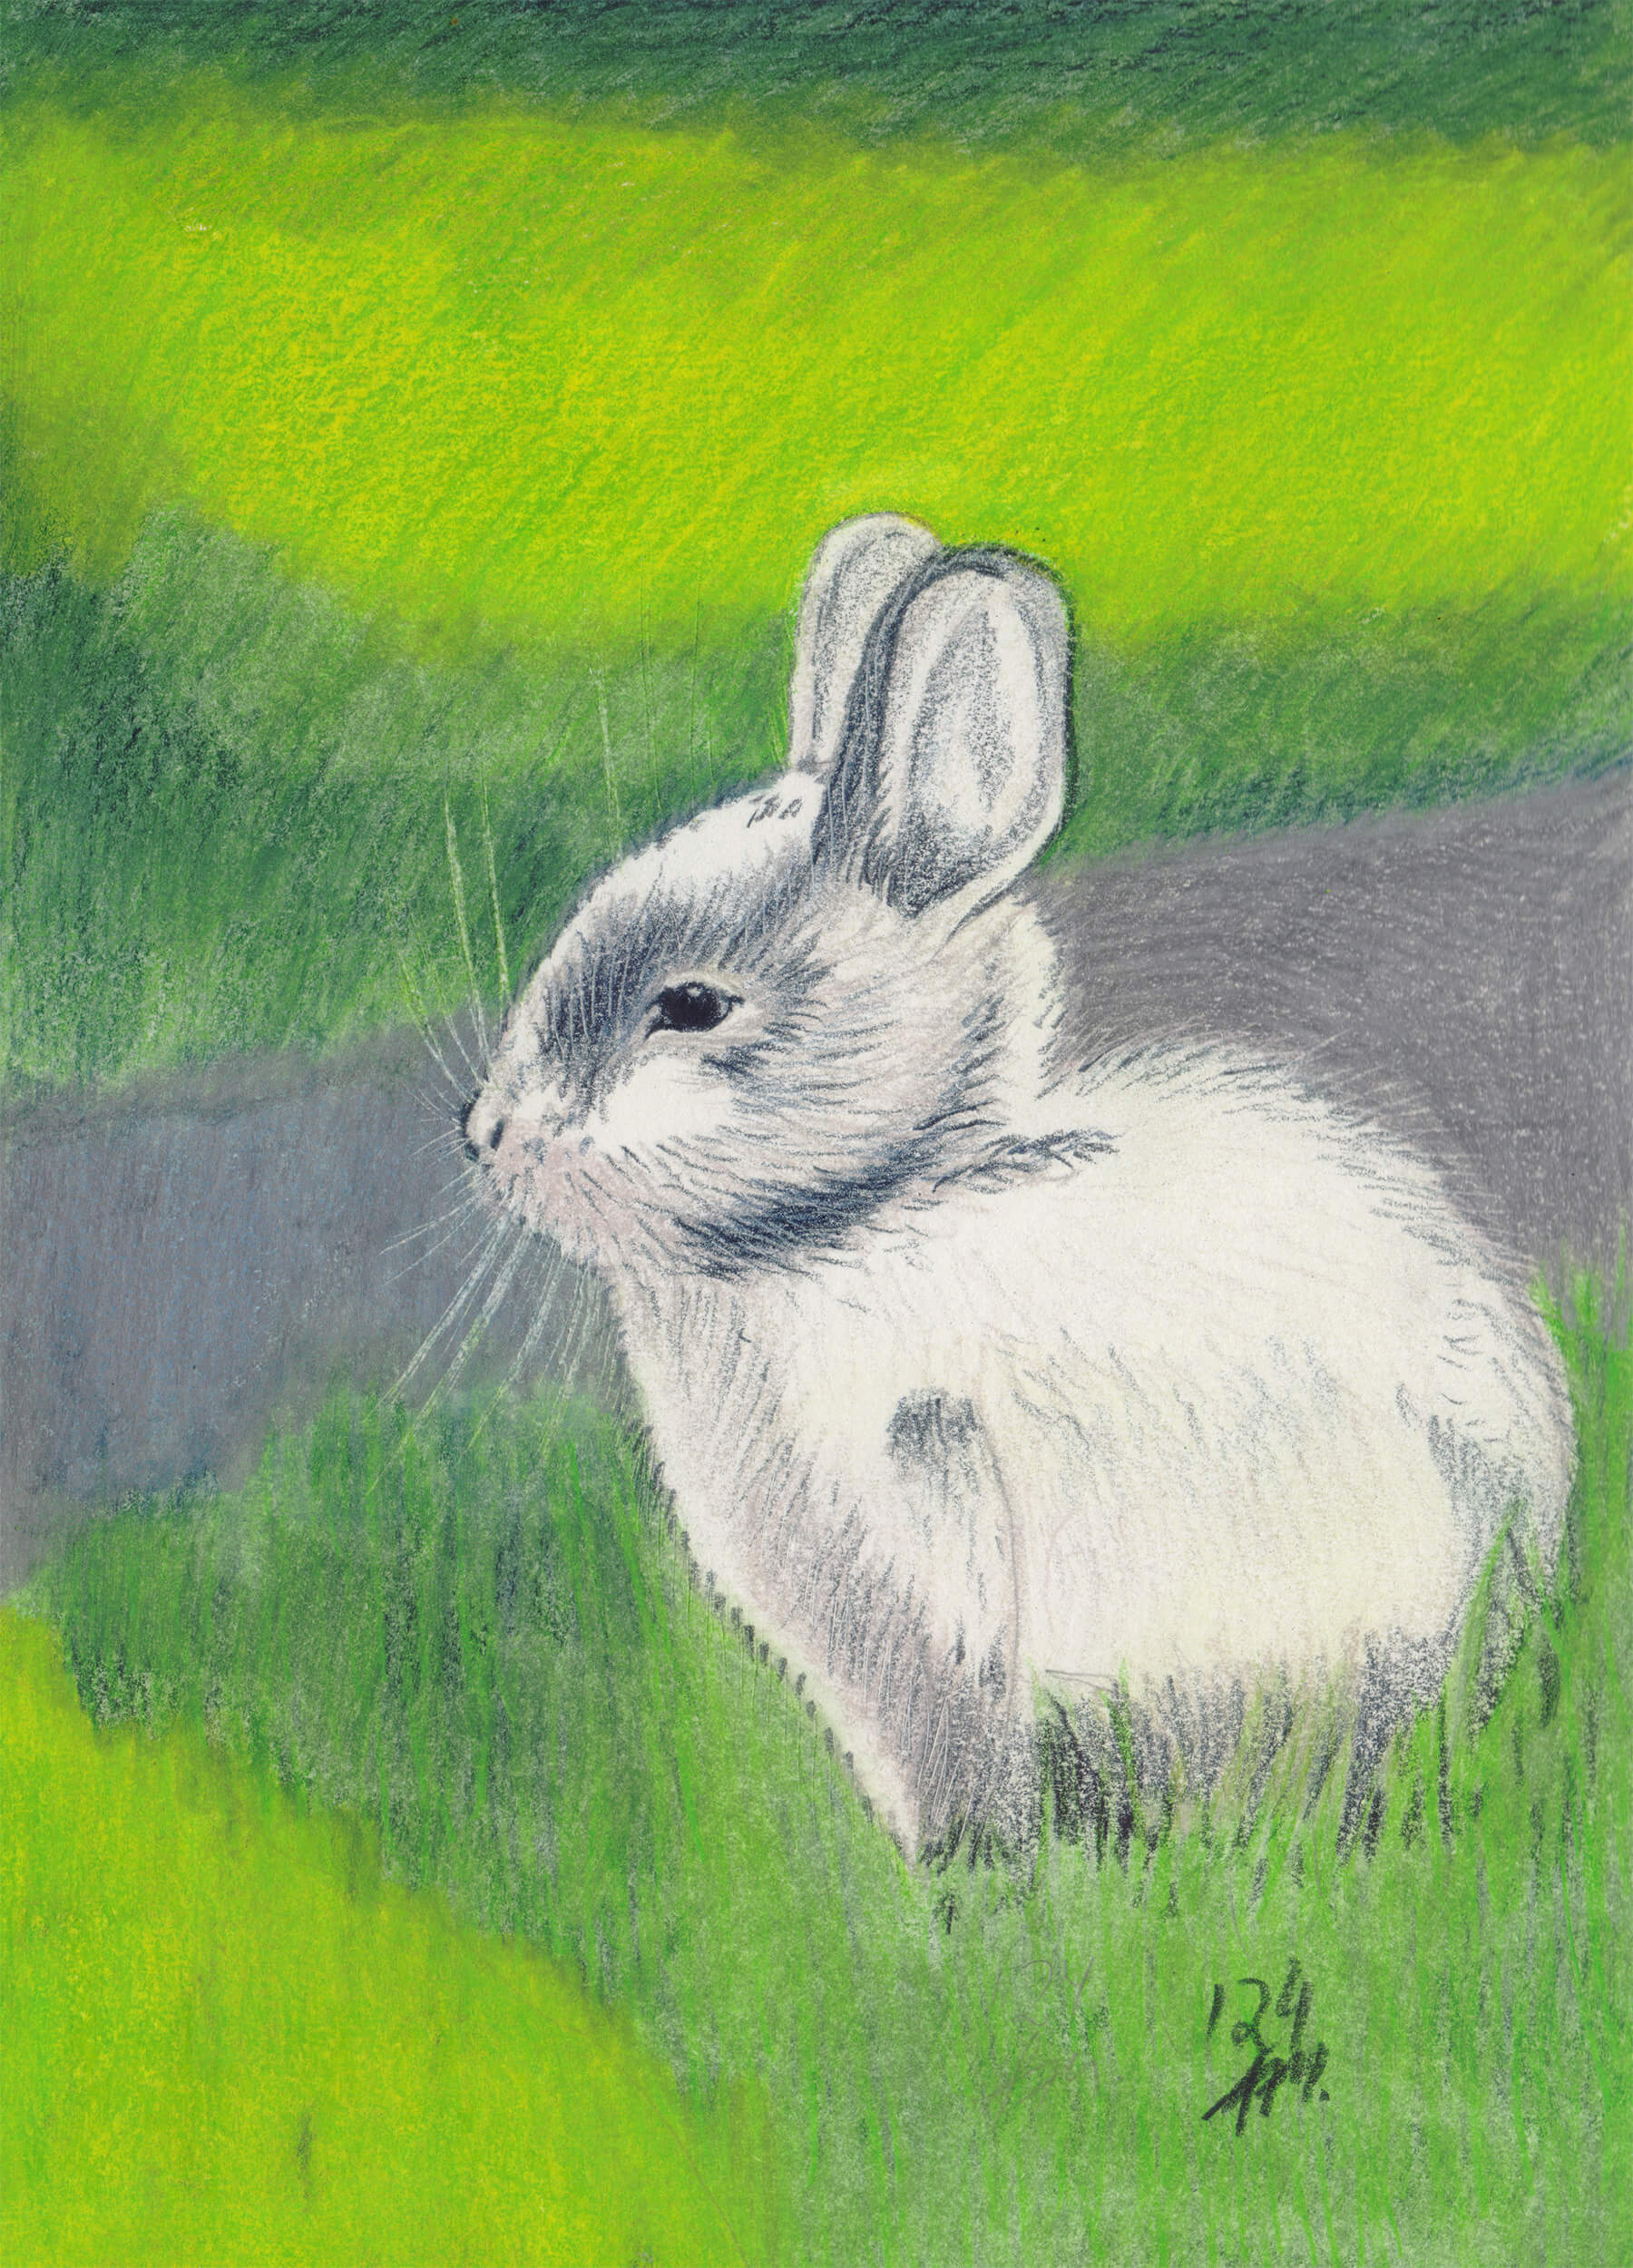 Graues Kaninchen Postkarte fertige Buntstiftkolorierung